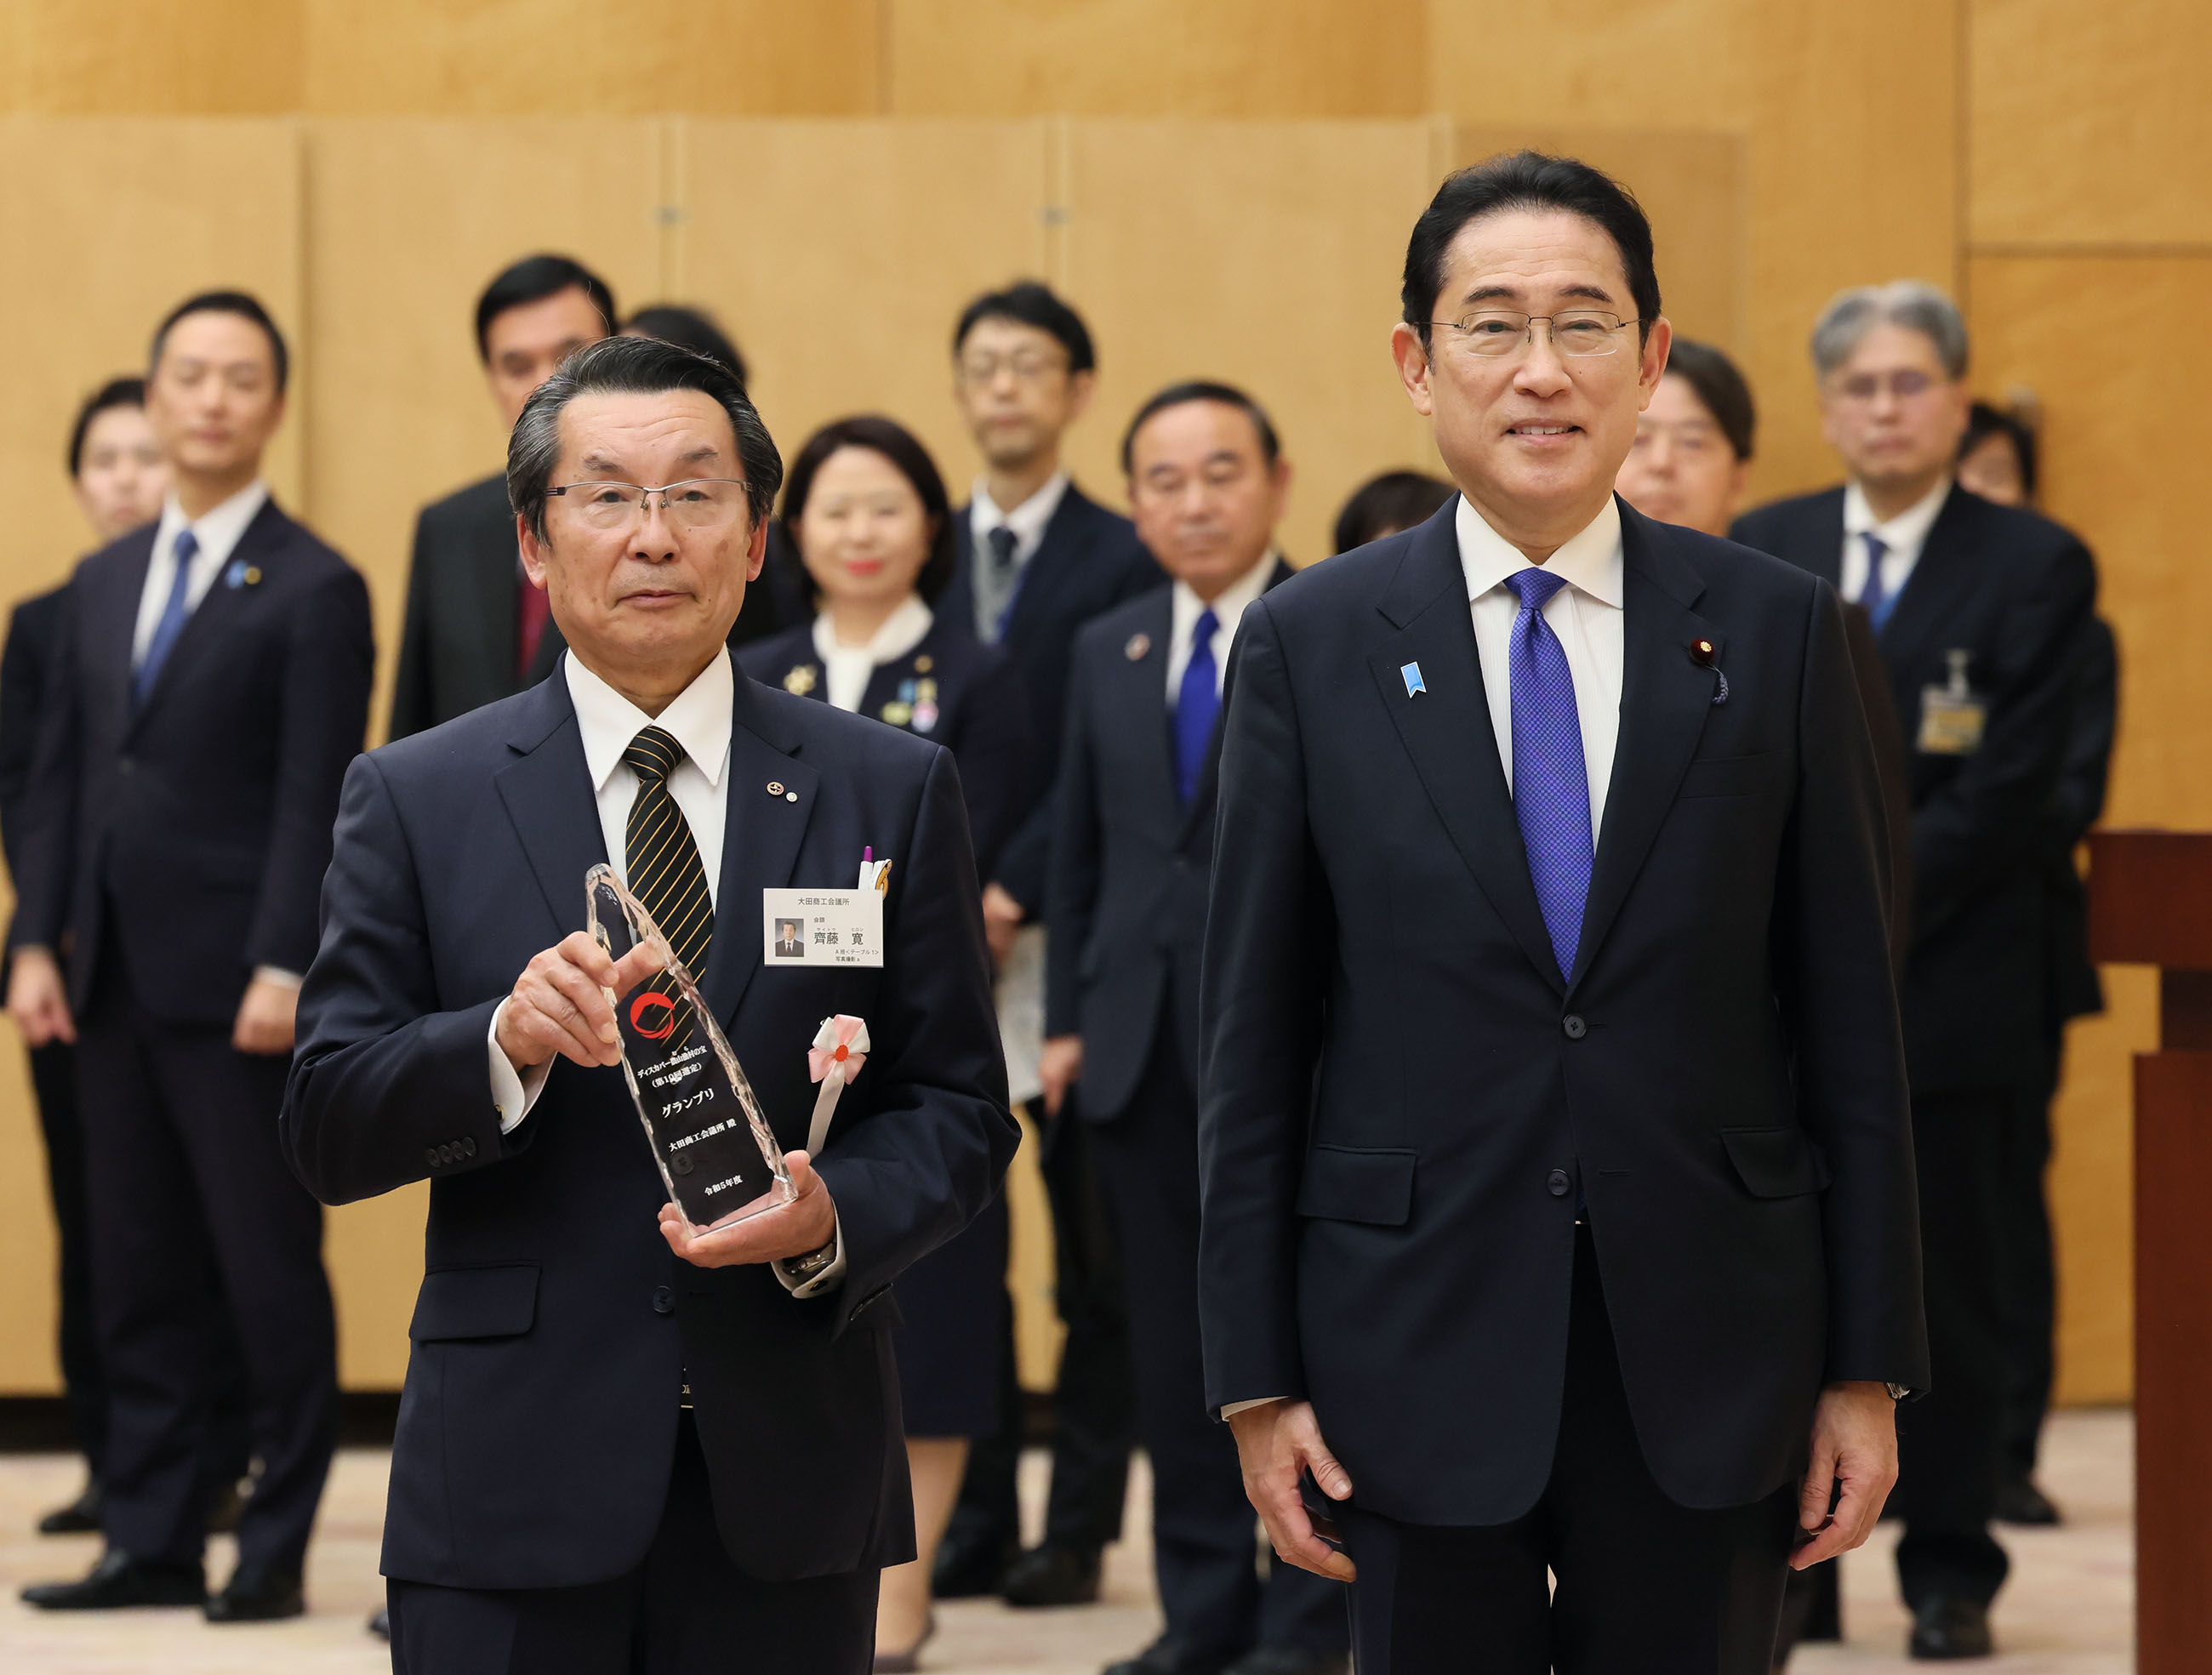 Prime Minister Kishida presenting a plaque (2)